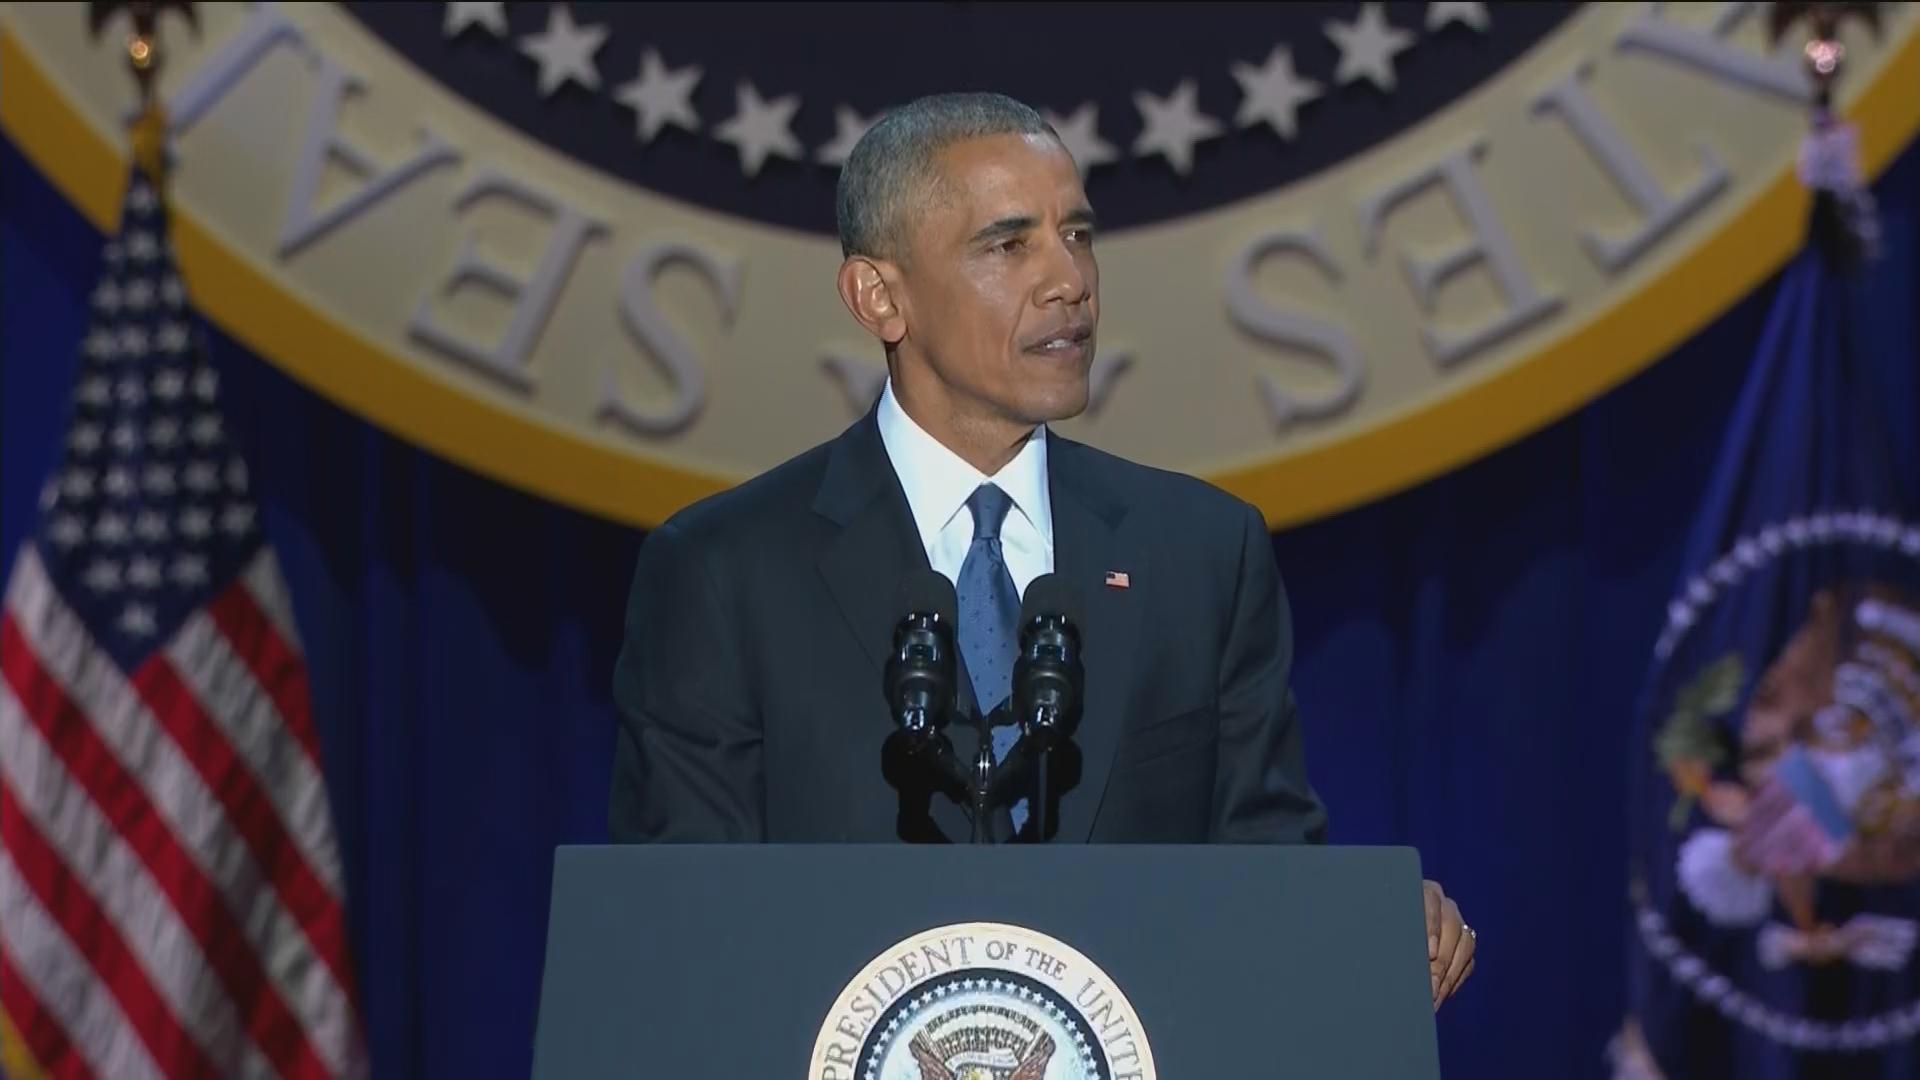 Former President Barack Obama delivers his farewell address in Chicago on Jan. 10, 2017.